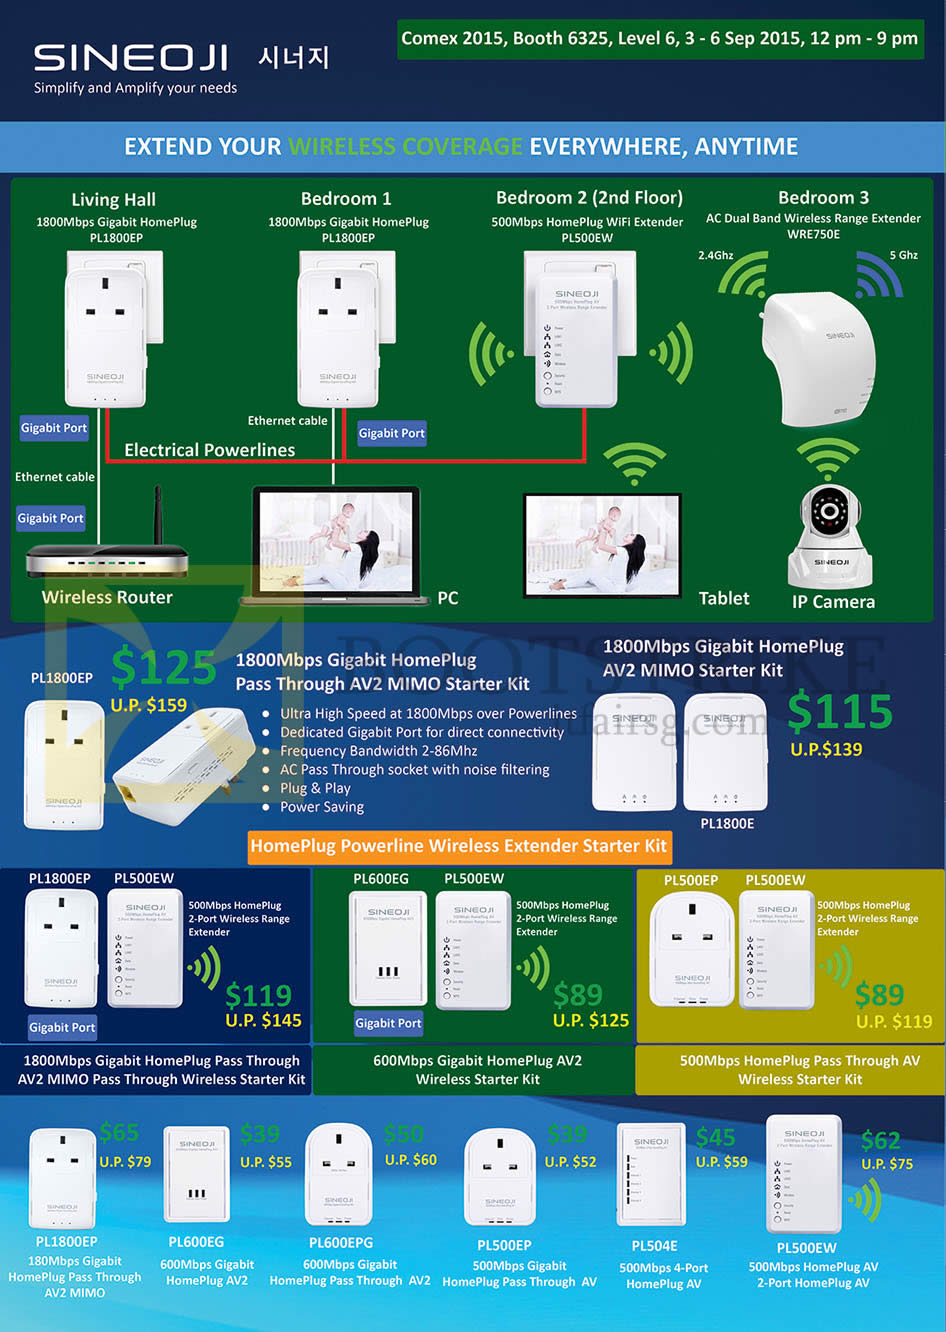 COMEX 2015 price list image brochure of Sineoji Networking HomePlugs, Wireless Extender Starter Kit, PL1800EP, PL500EW, WRE750E, PL1800EP, PL1800E, PL1800EP, PL500EW